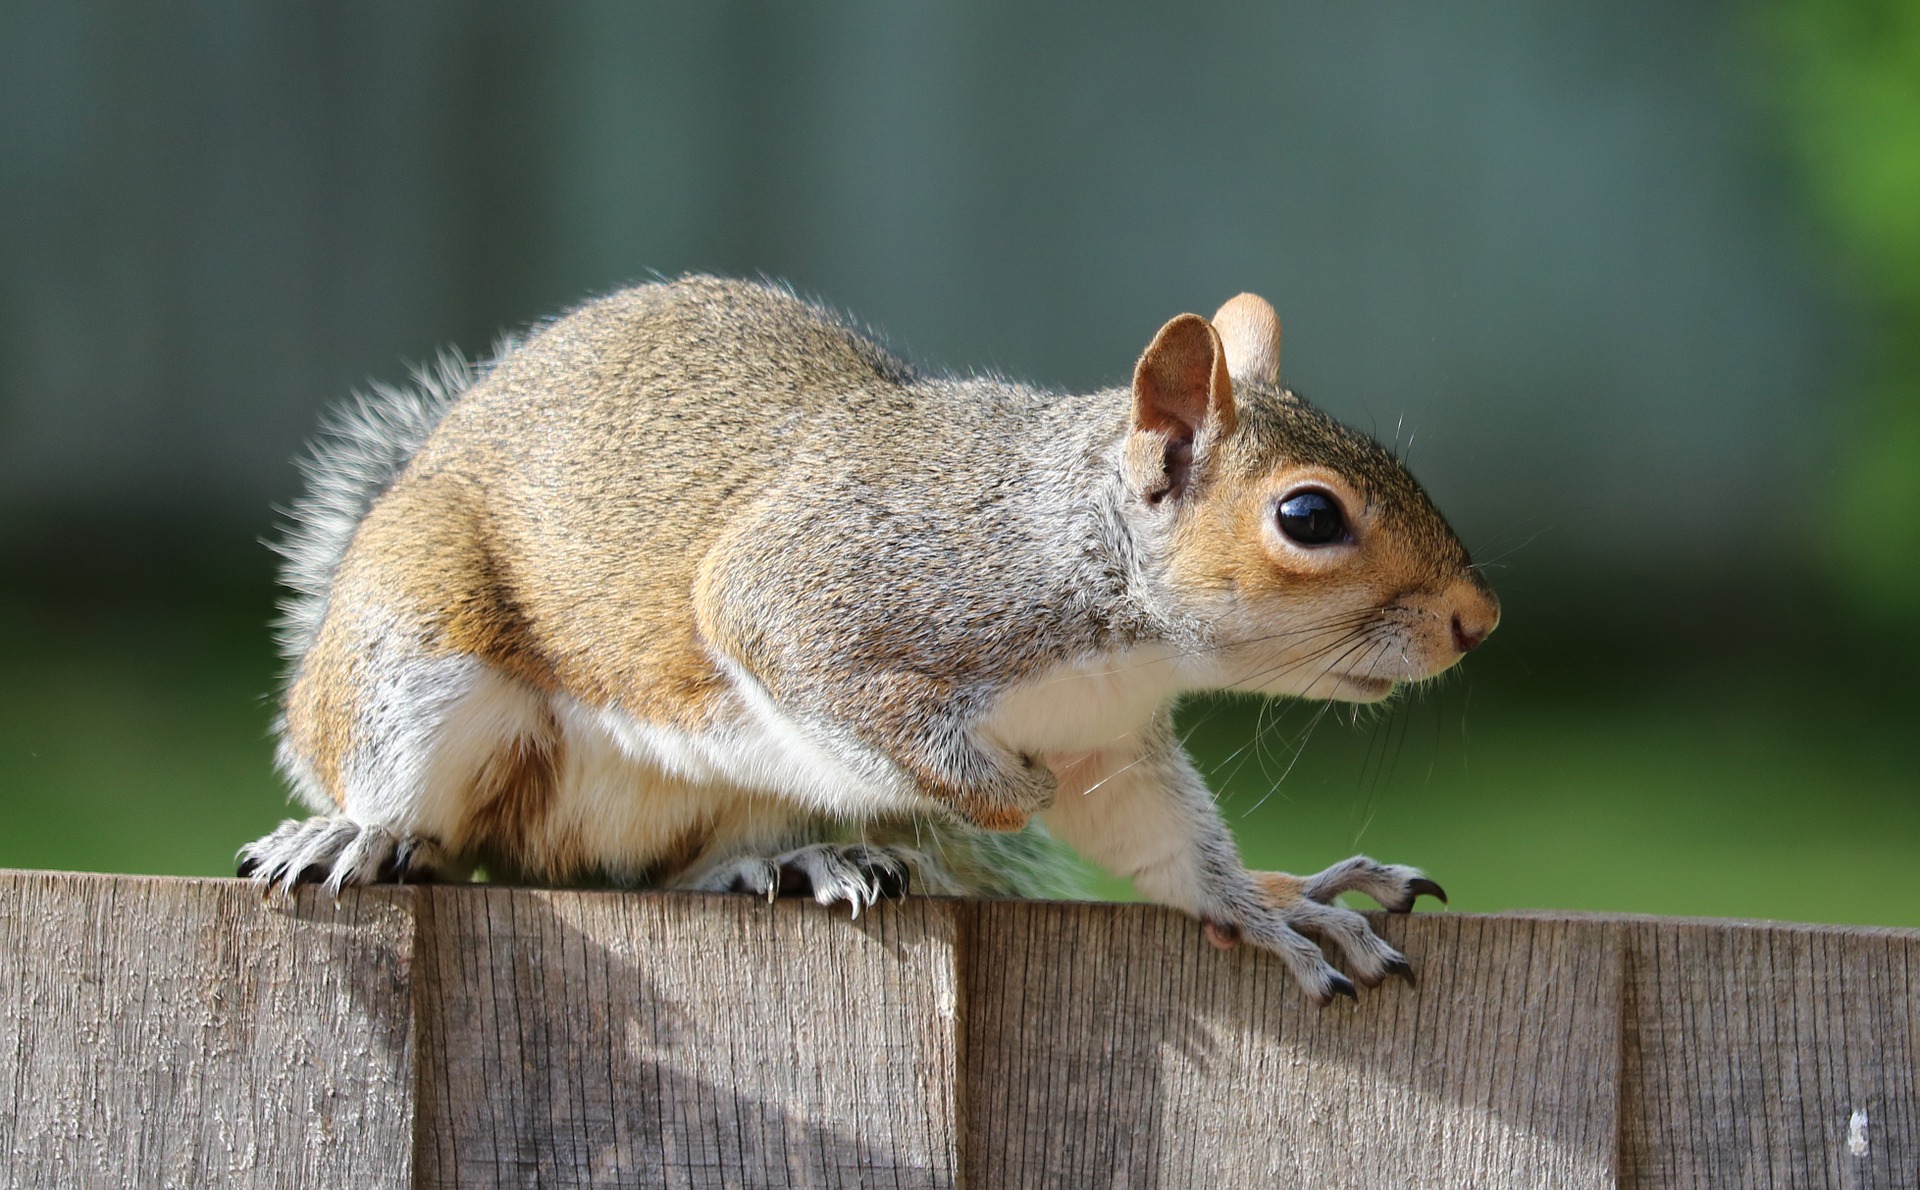 Squirrel treatments in Tilehurst